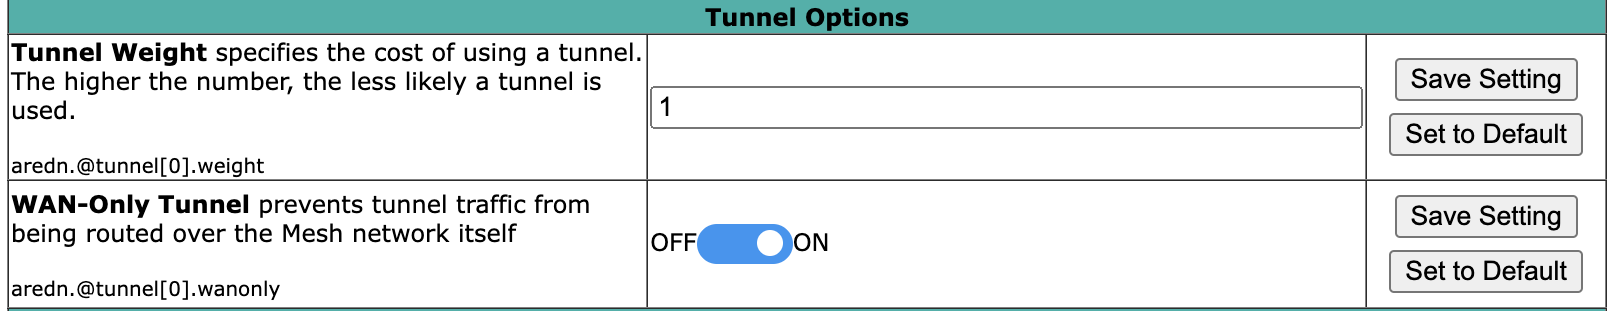 Advanced Configuration - tunnel options